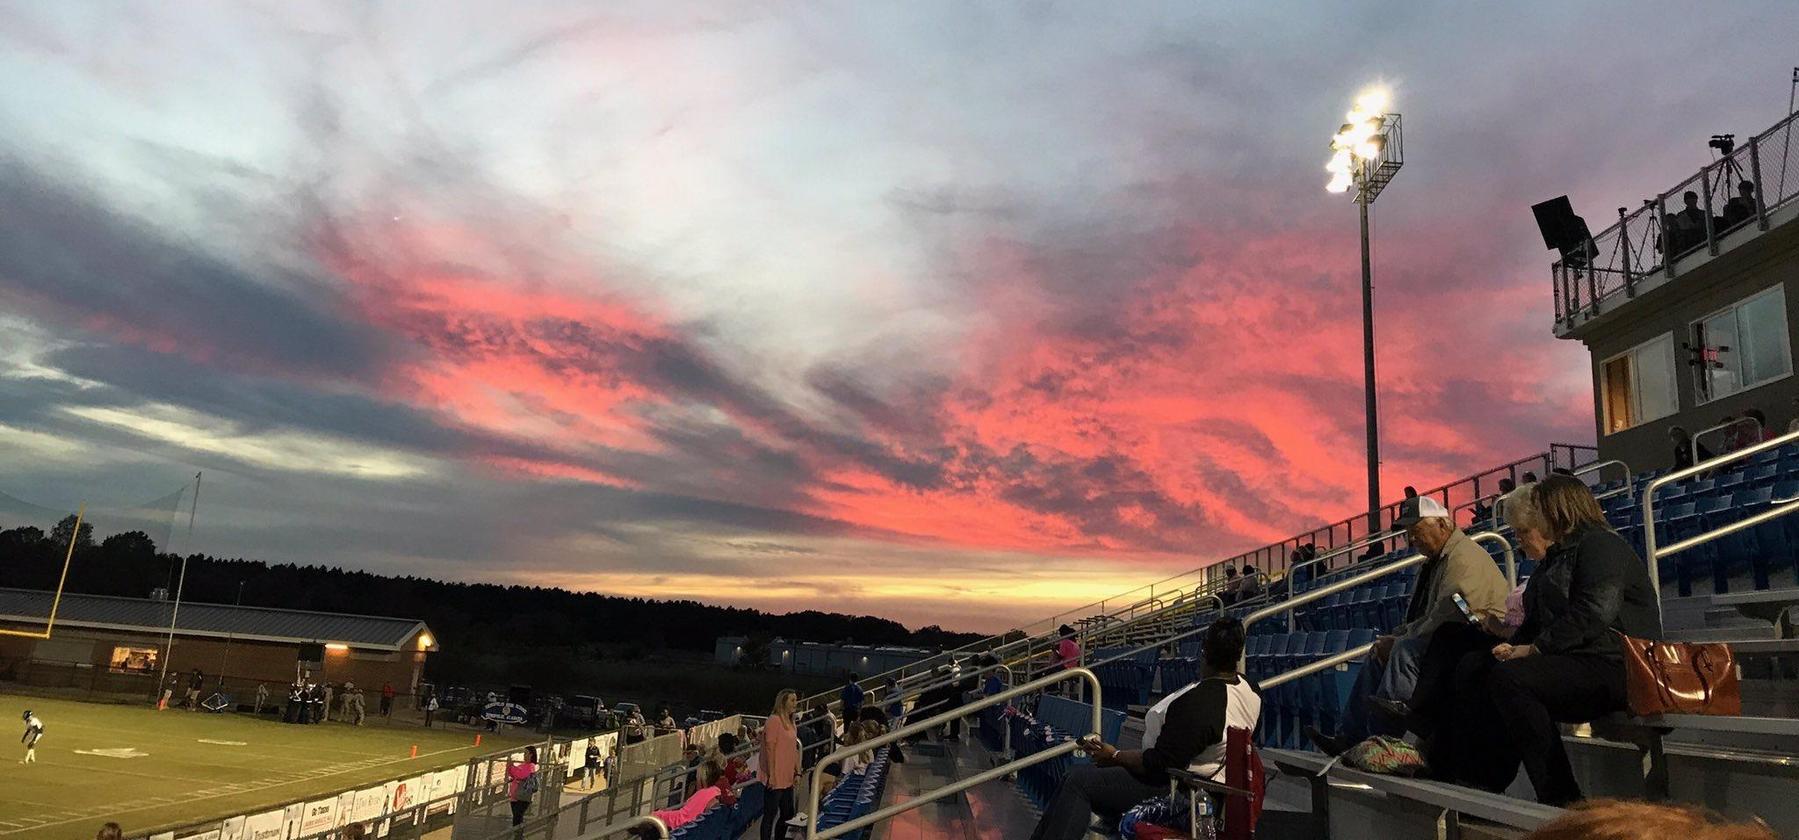 DHS Football Stadium during sunset